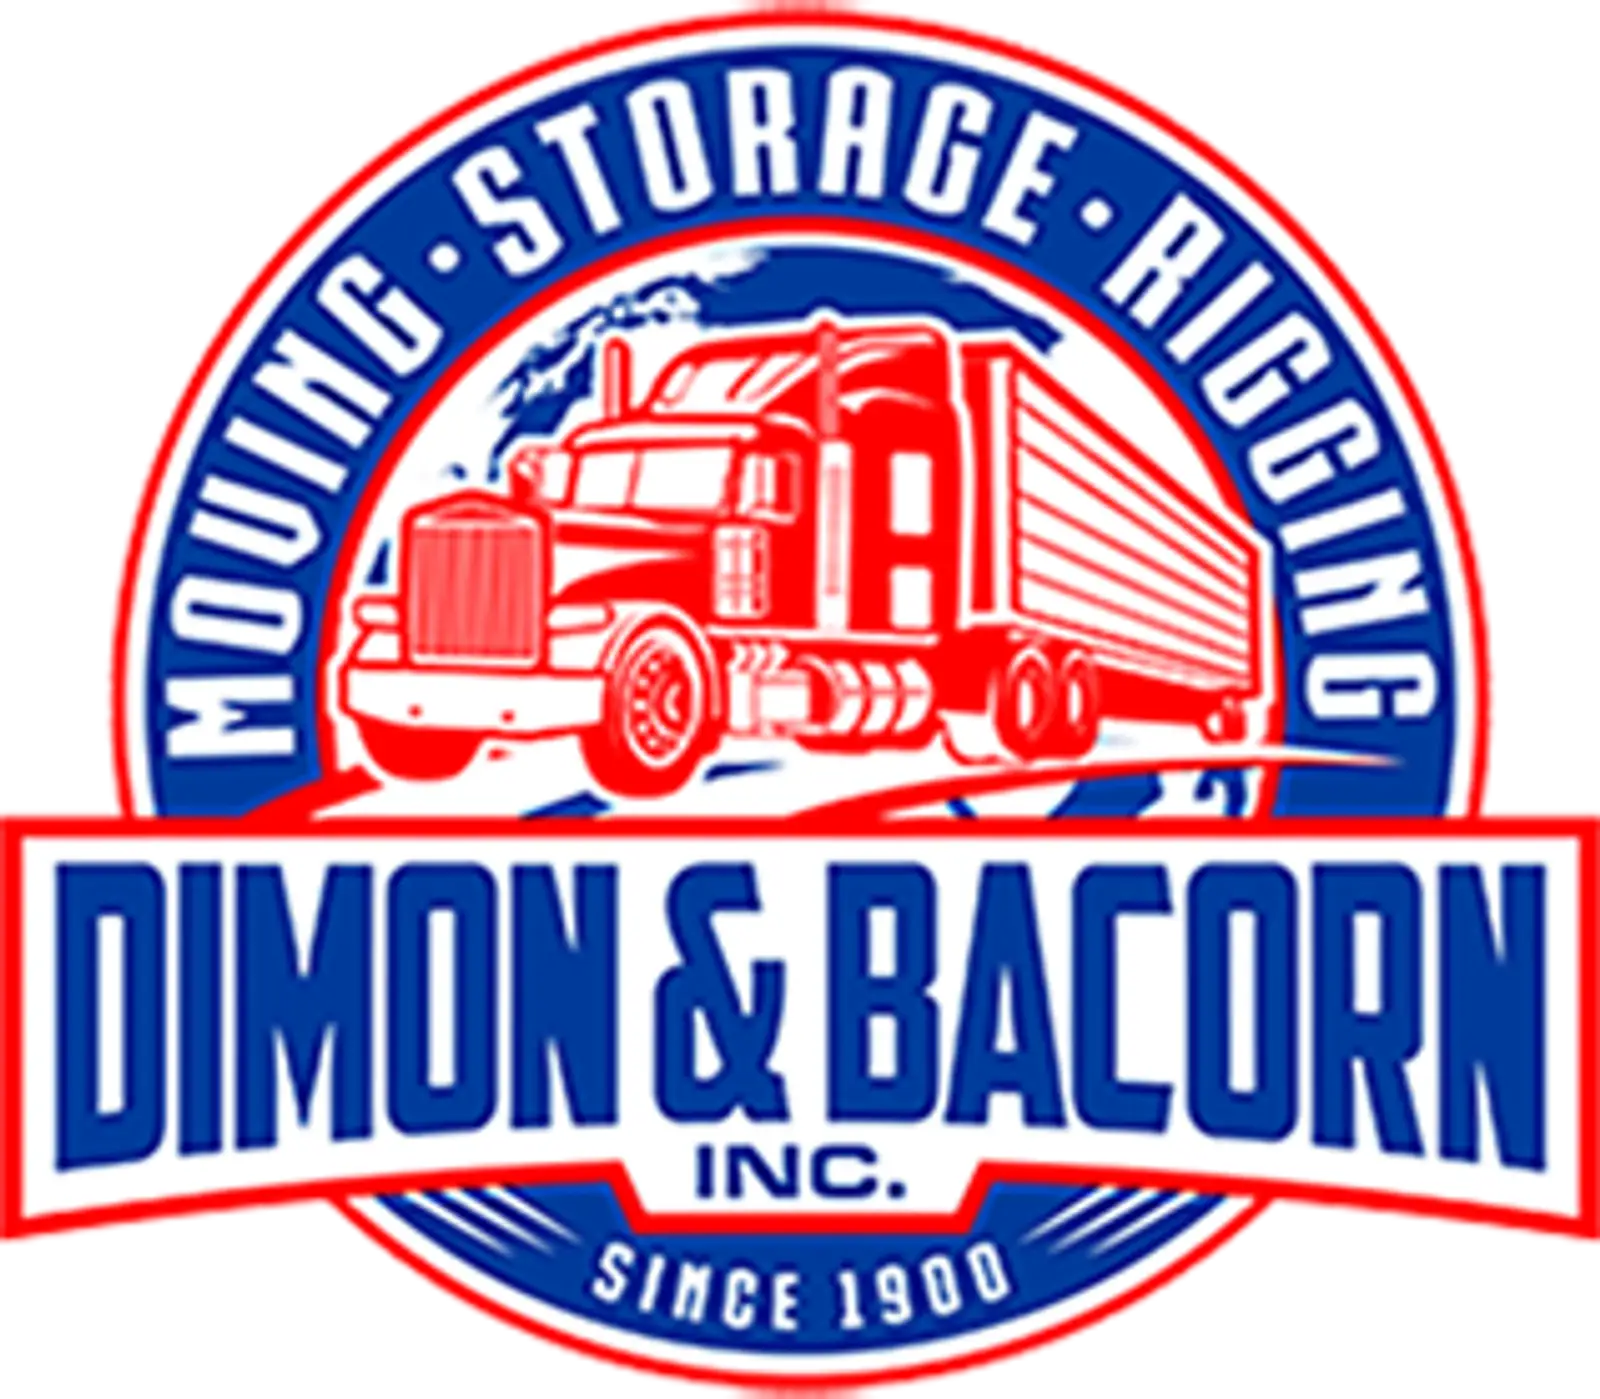 Dimon and Bacorn logo